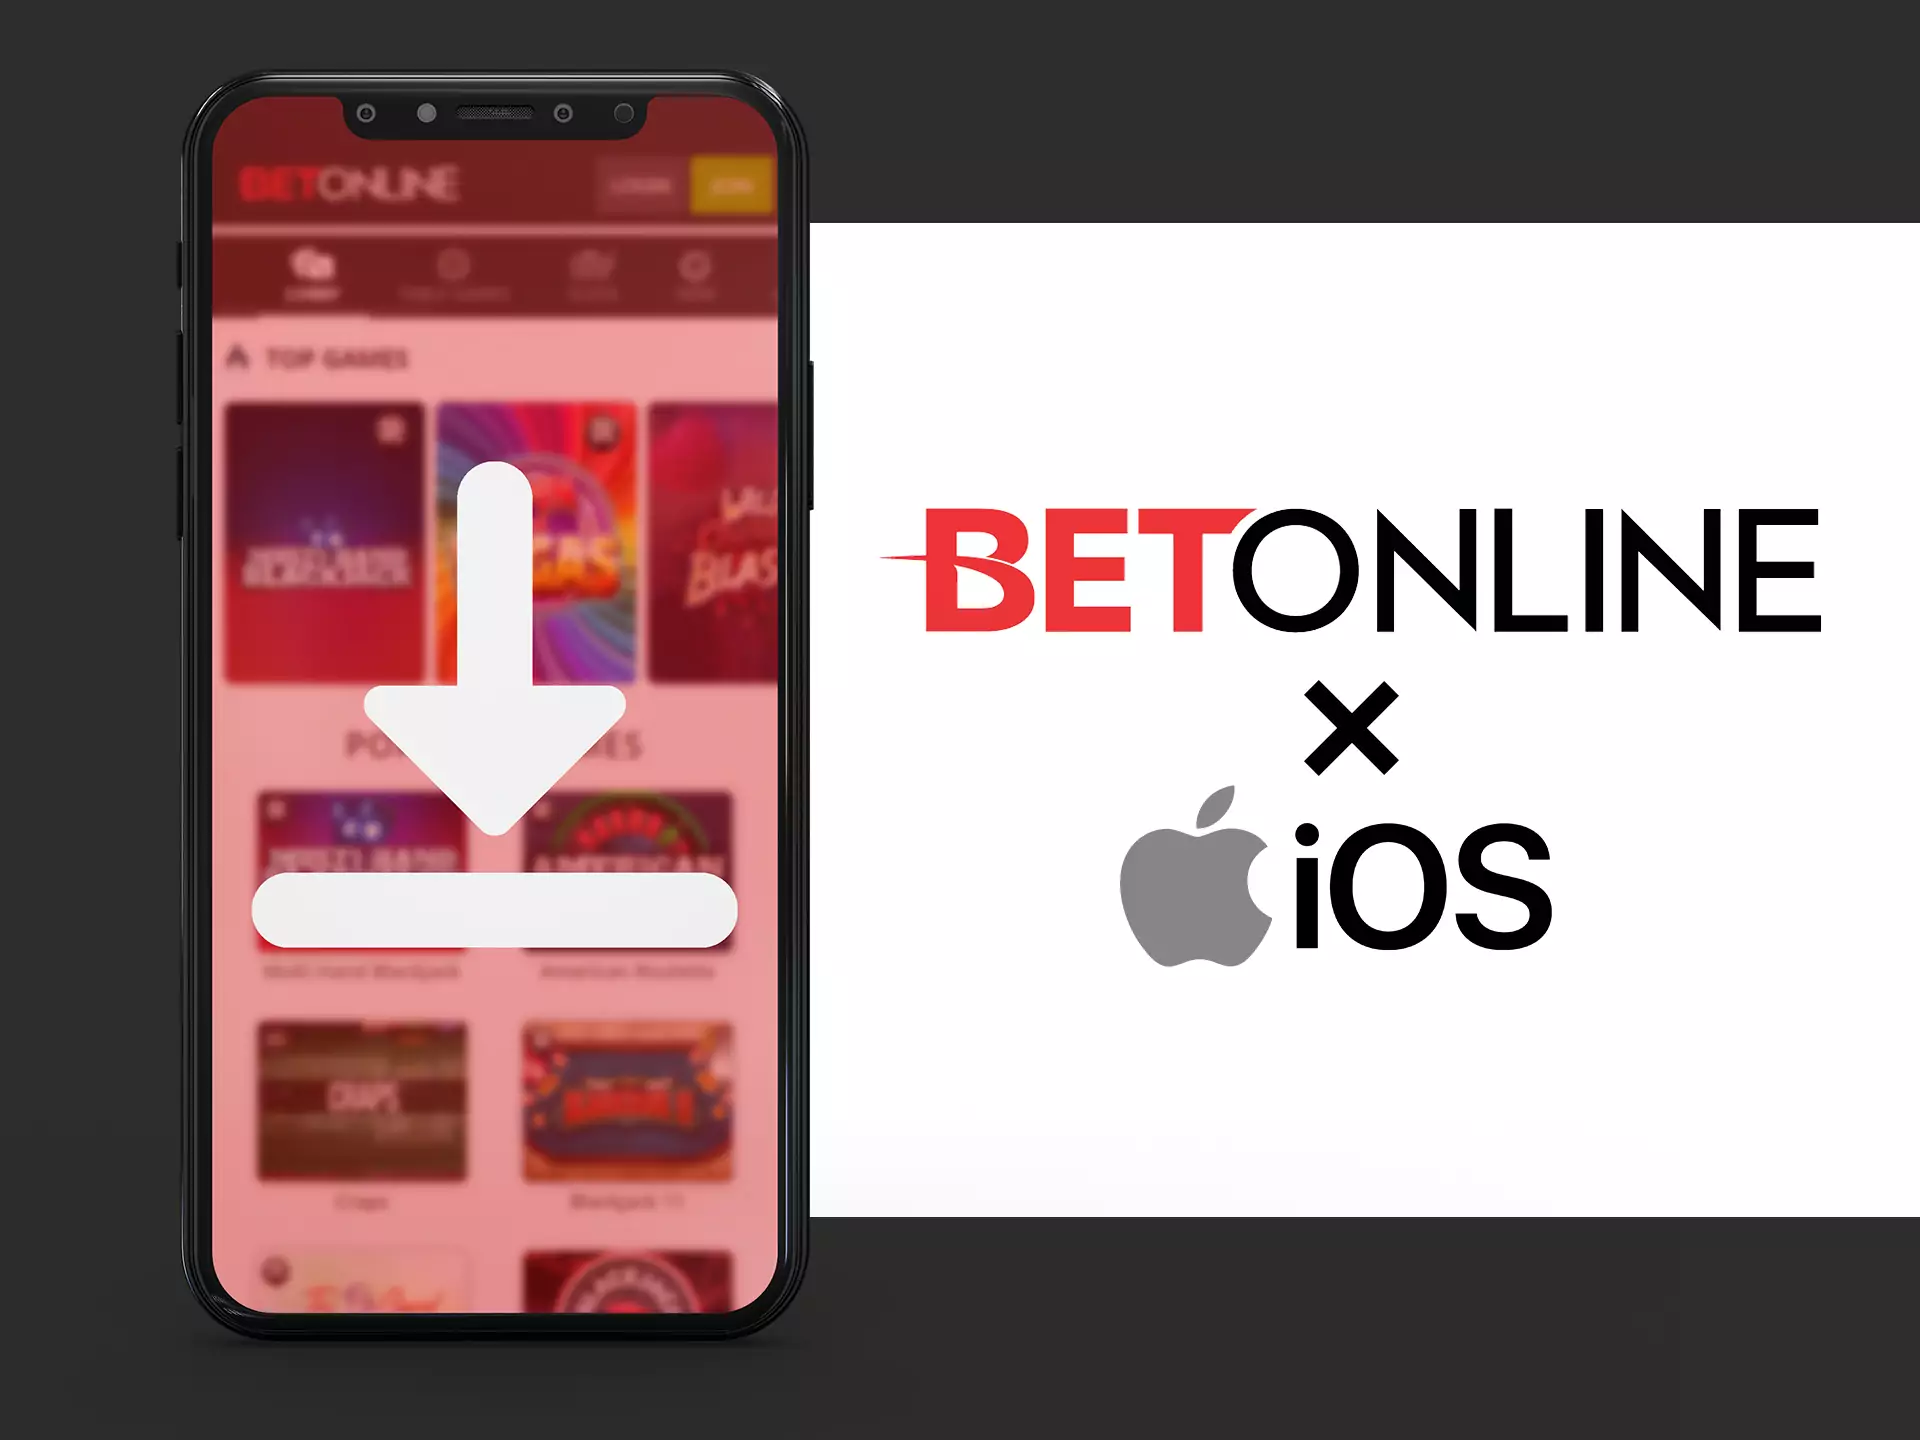 The Betonline app for iOS is in development.